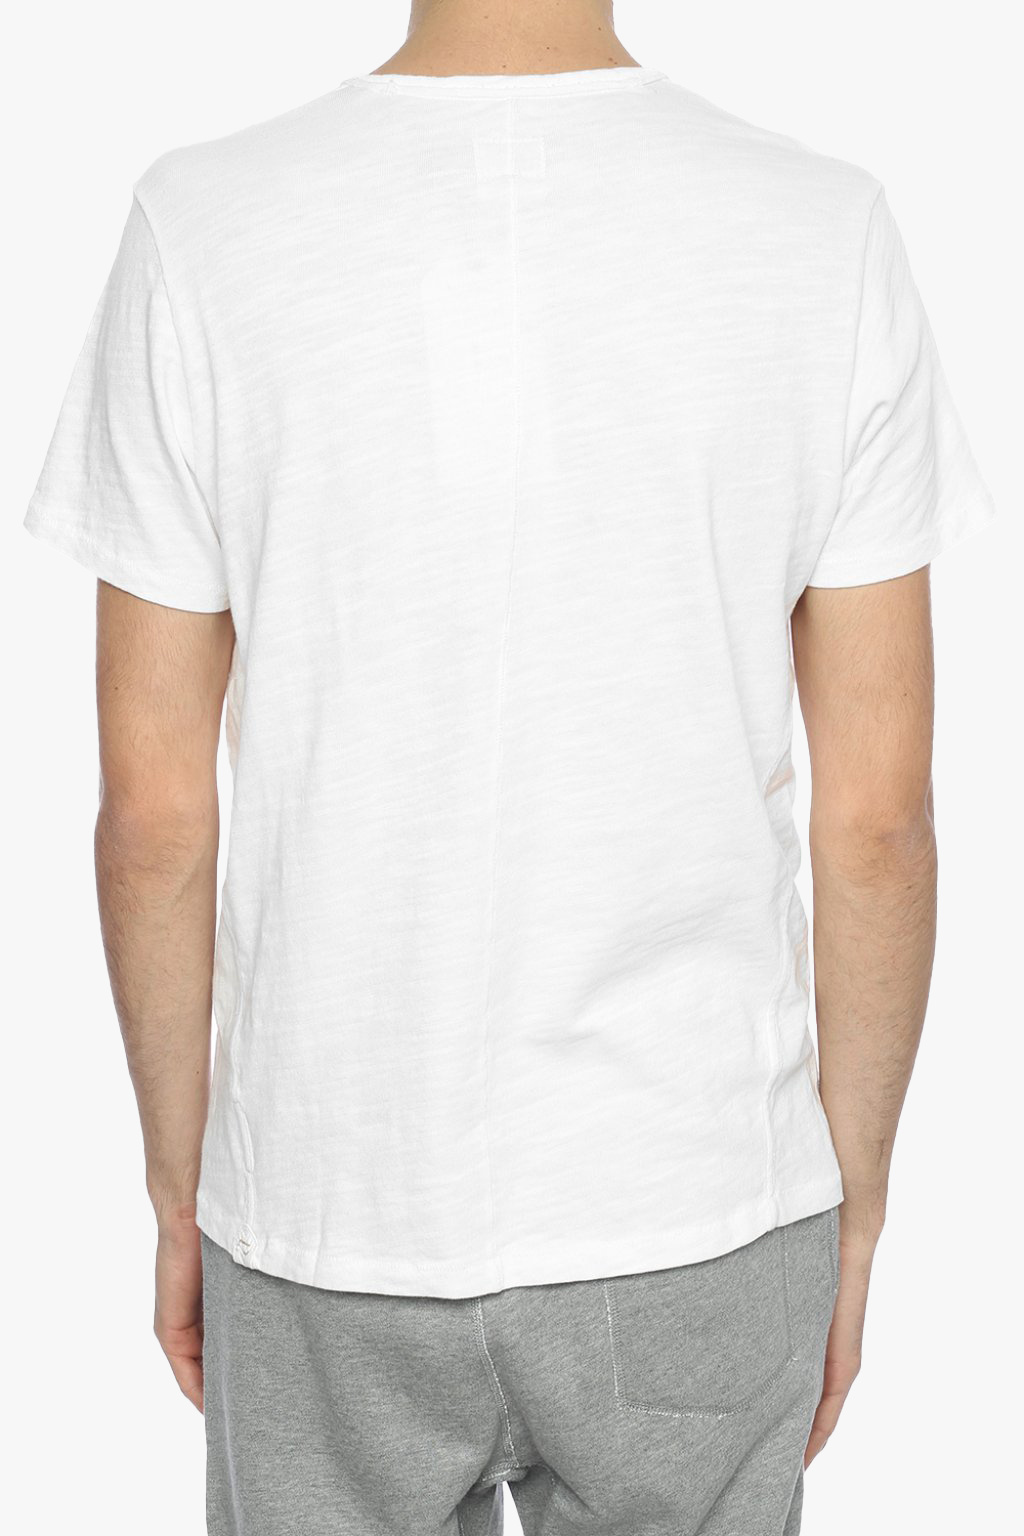 GenesinlifeShops Chad - shirt Rag & Bone - White Crewneck T - T-shirt with  elastic on the sleeves and hem